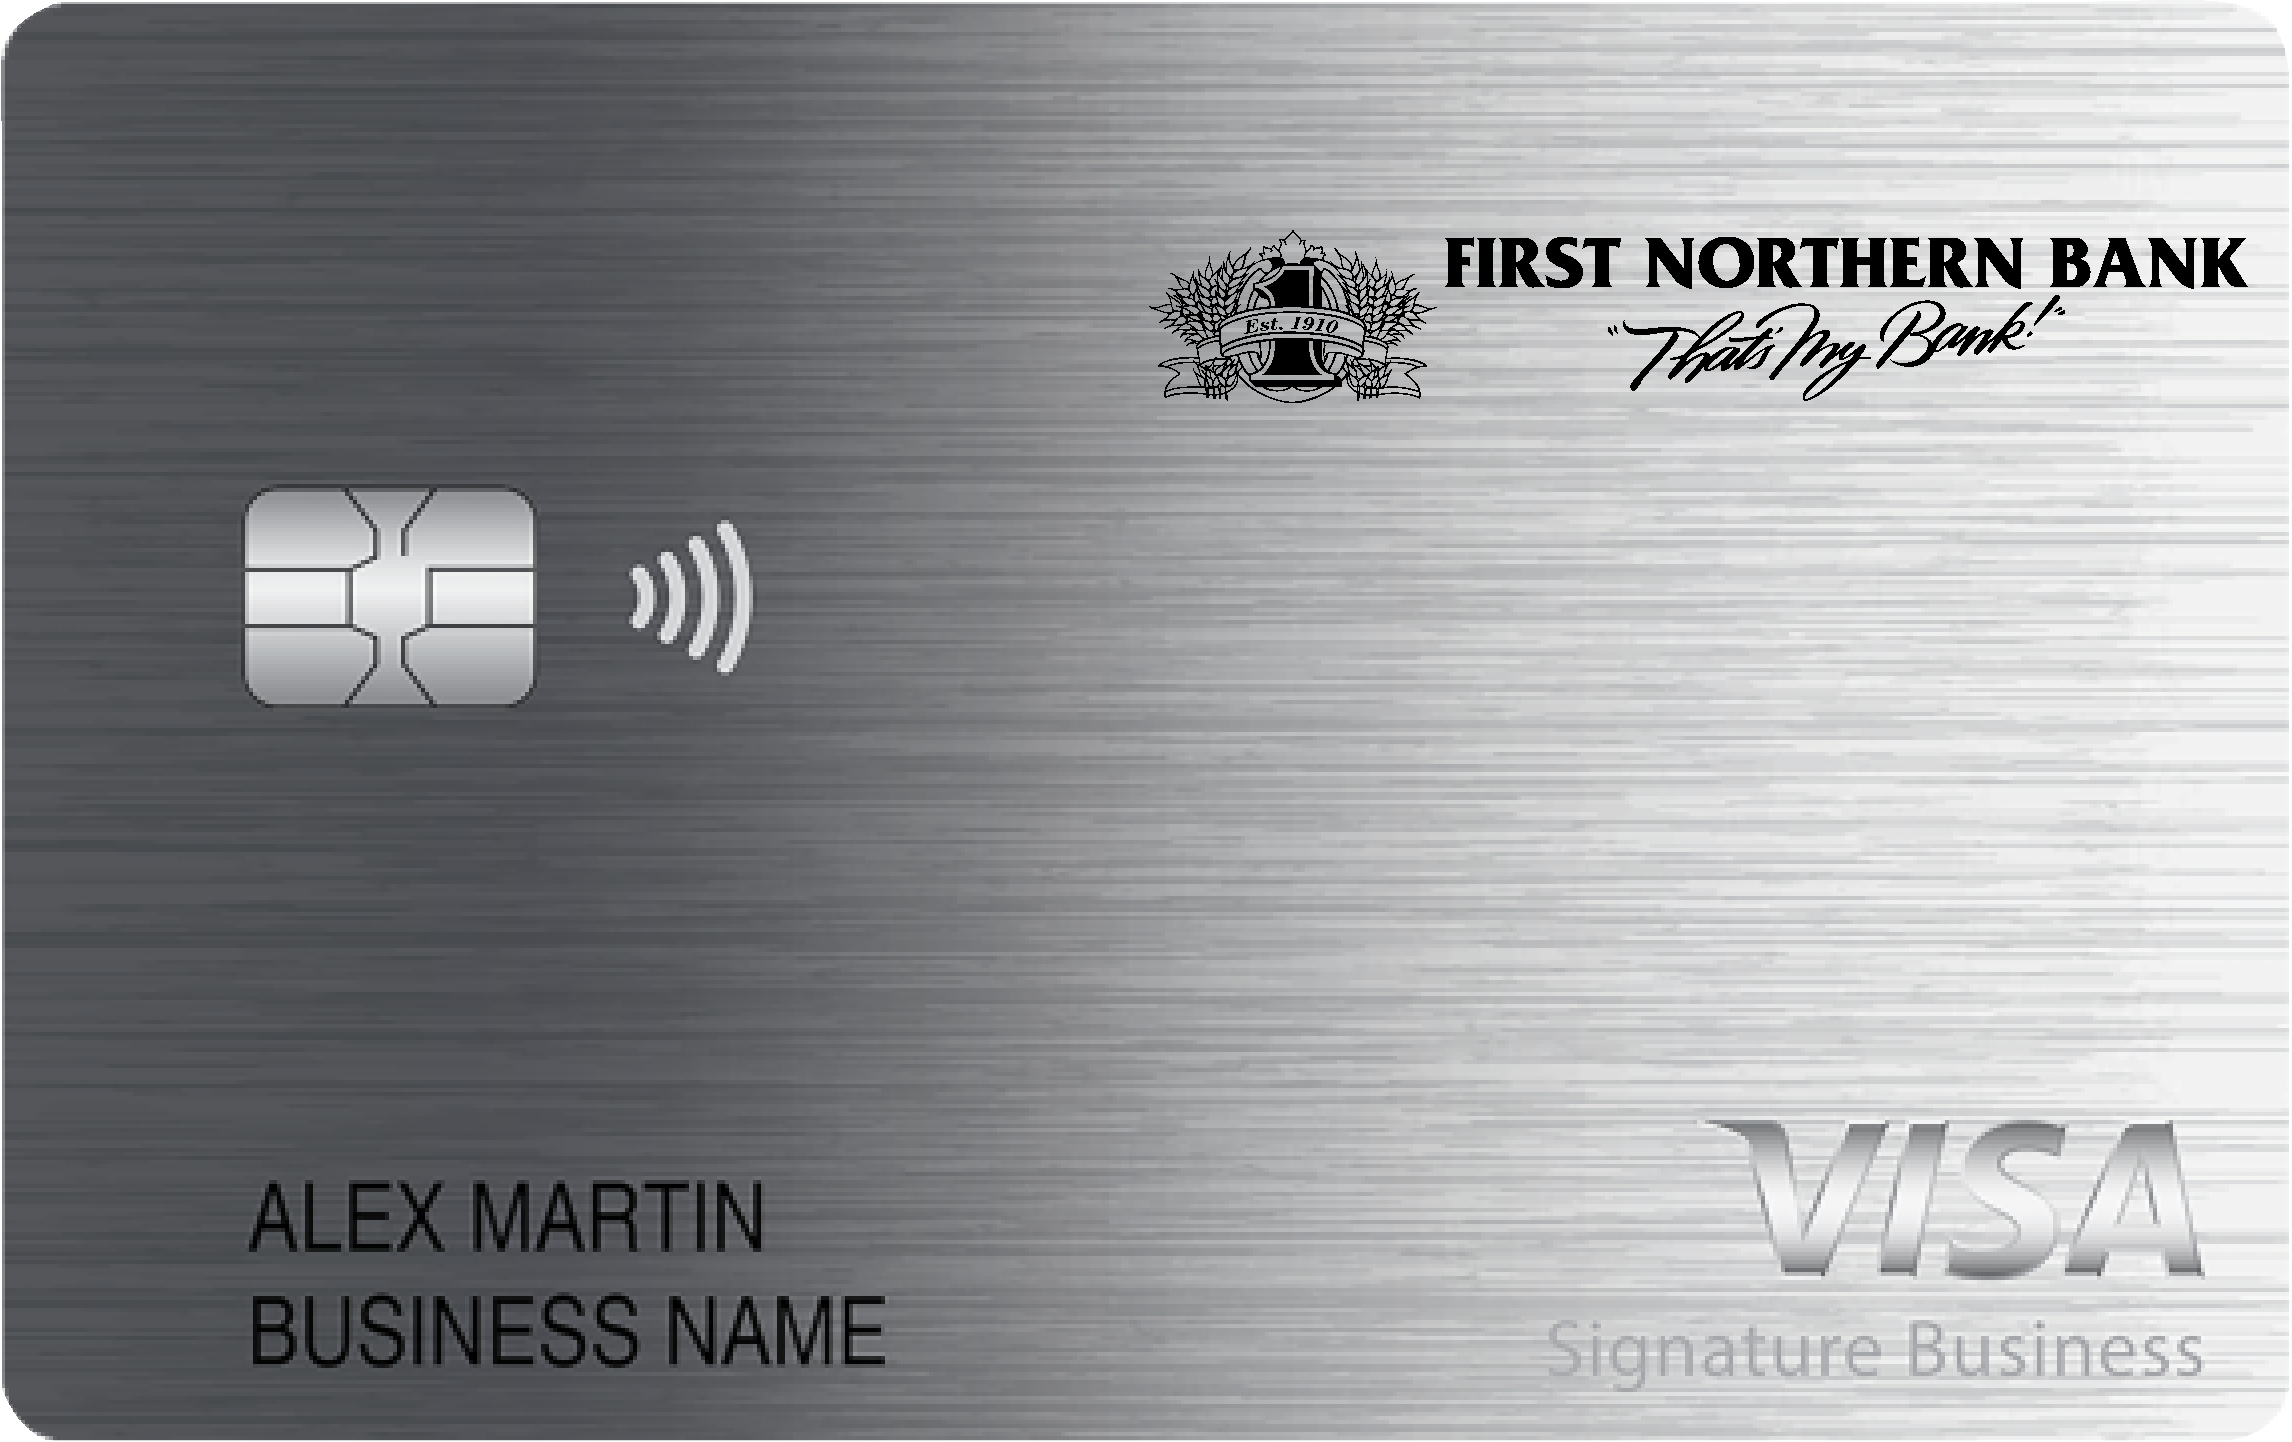 First Northern Bank Smart Business Rewards Card